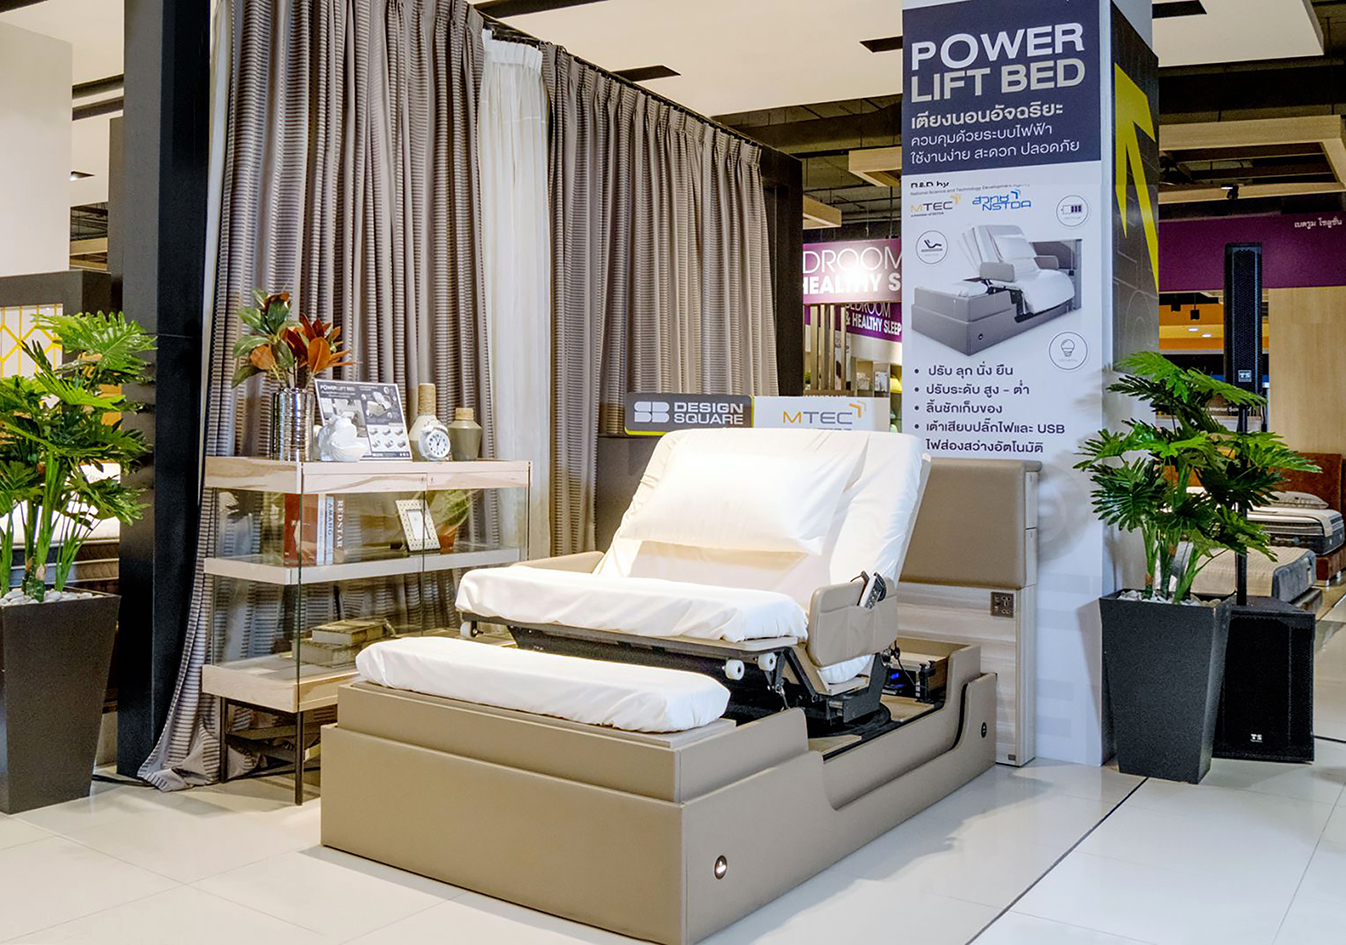 Power Lift Bed นวัตกรรมเตียงนอนสุดล้ำ รับสังคมสูงวัย